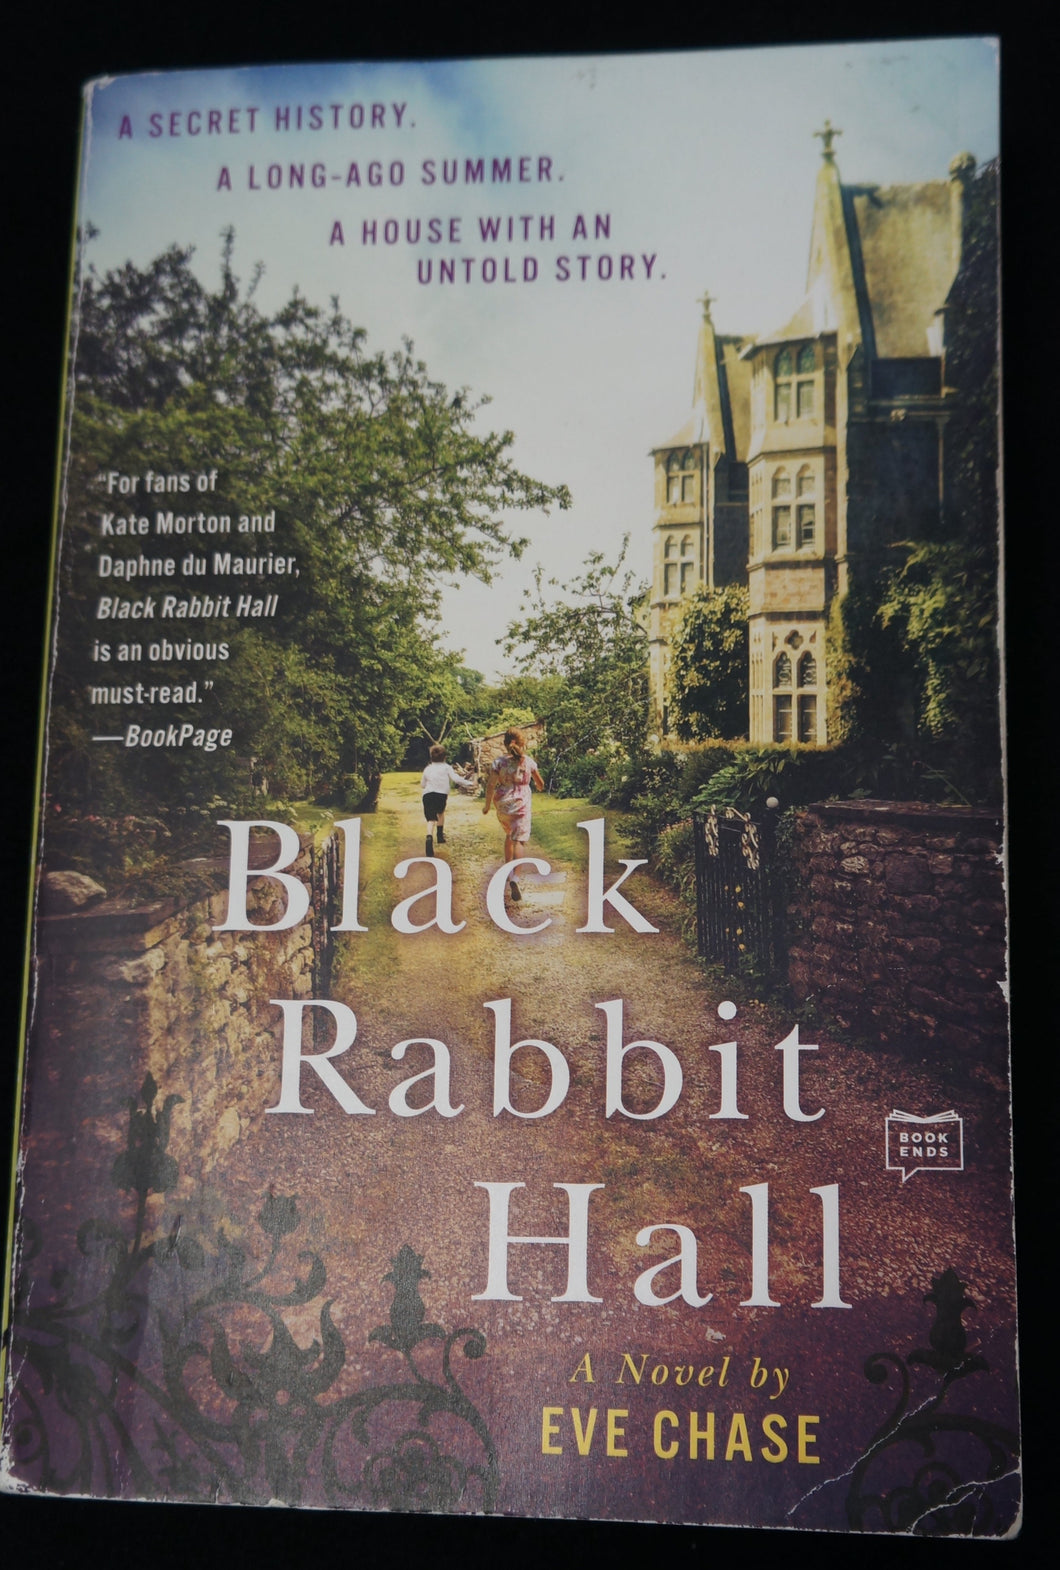 Black Rabbit Hall: A Novel by Eve Chase